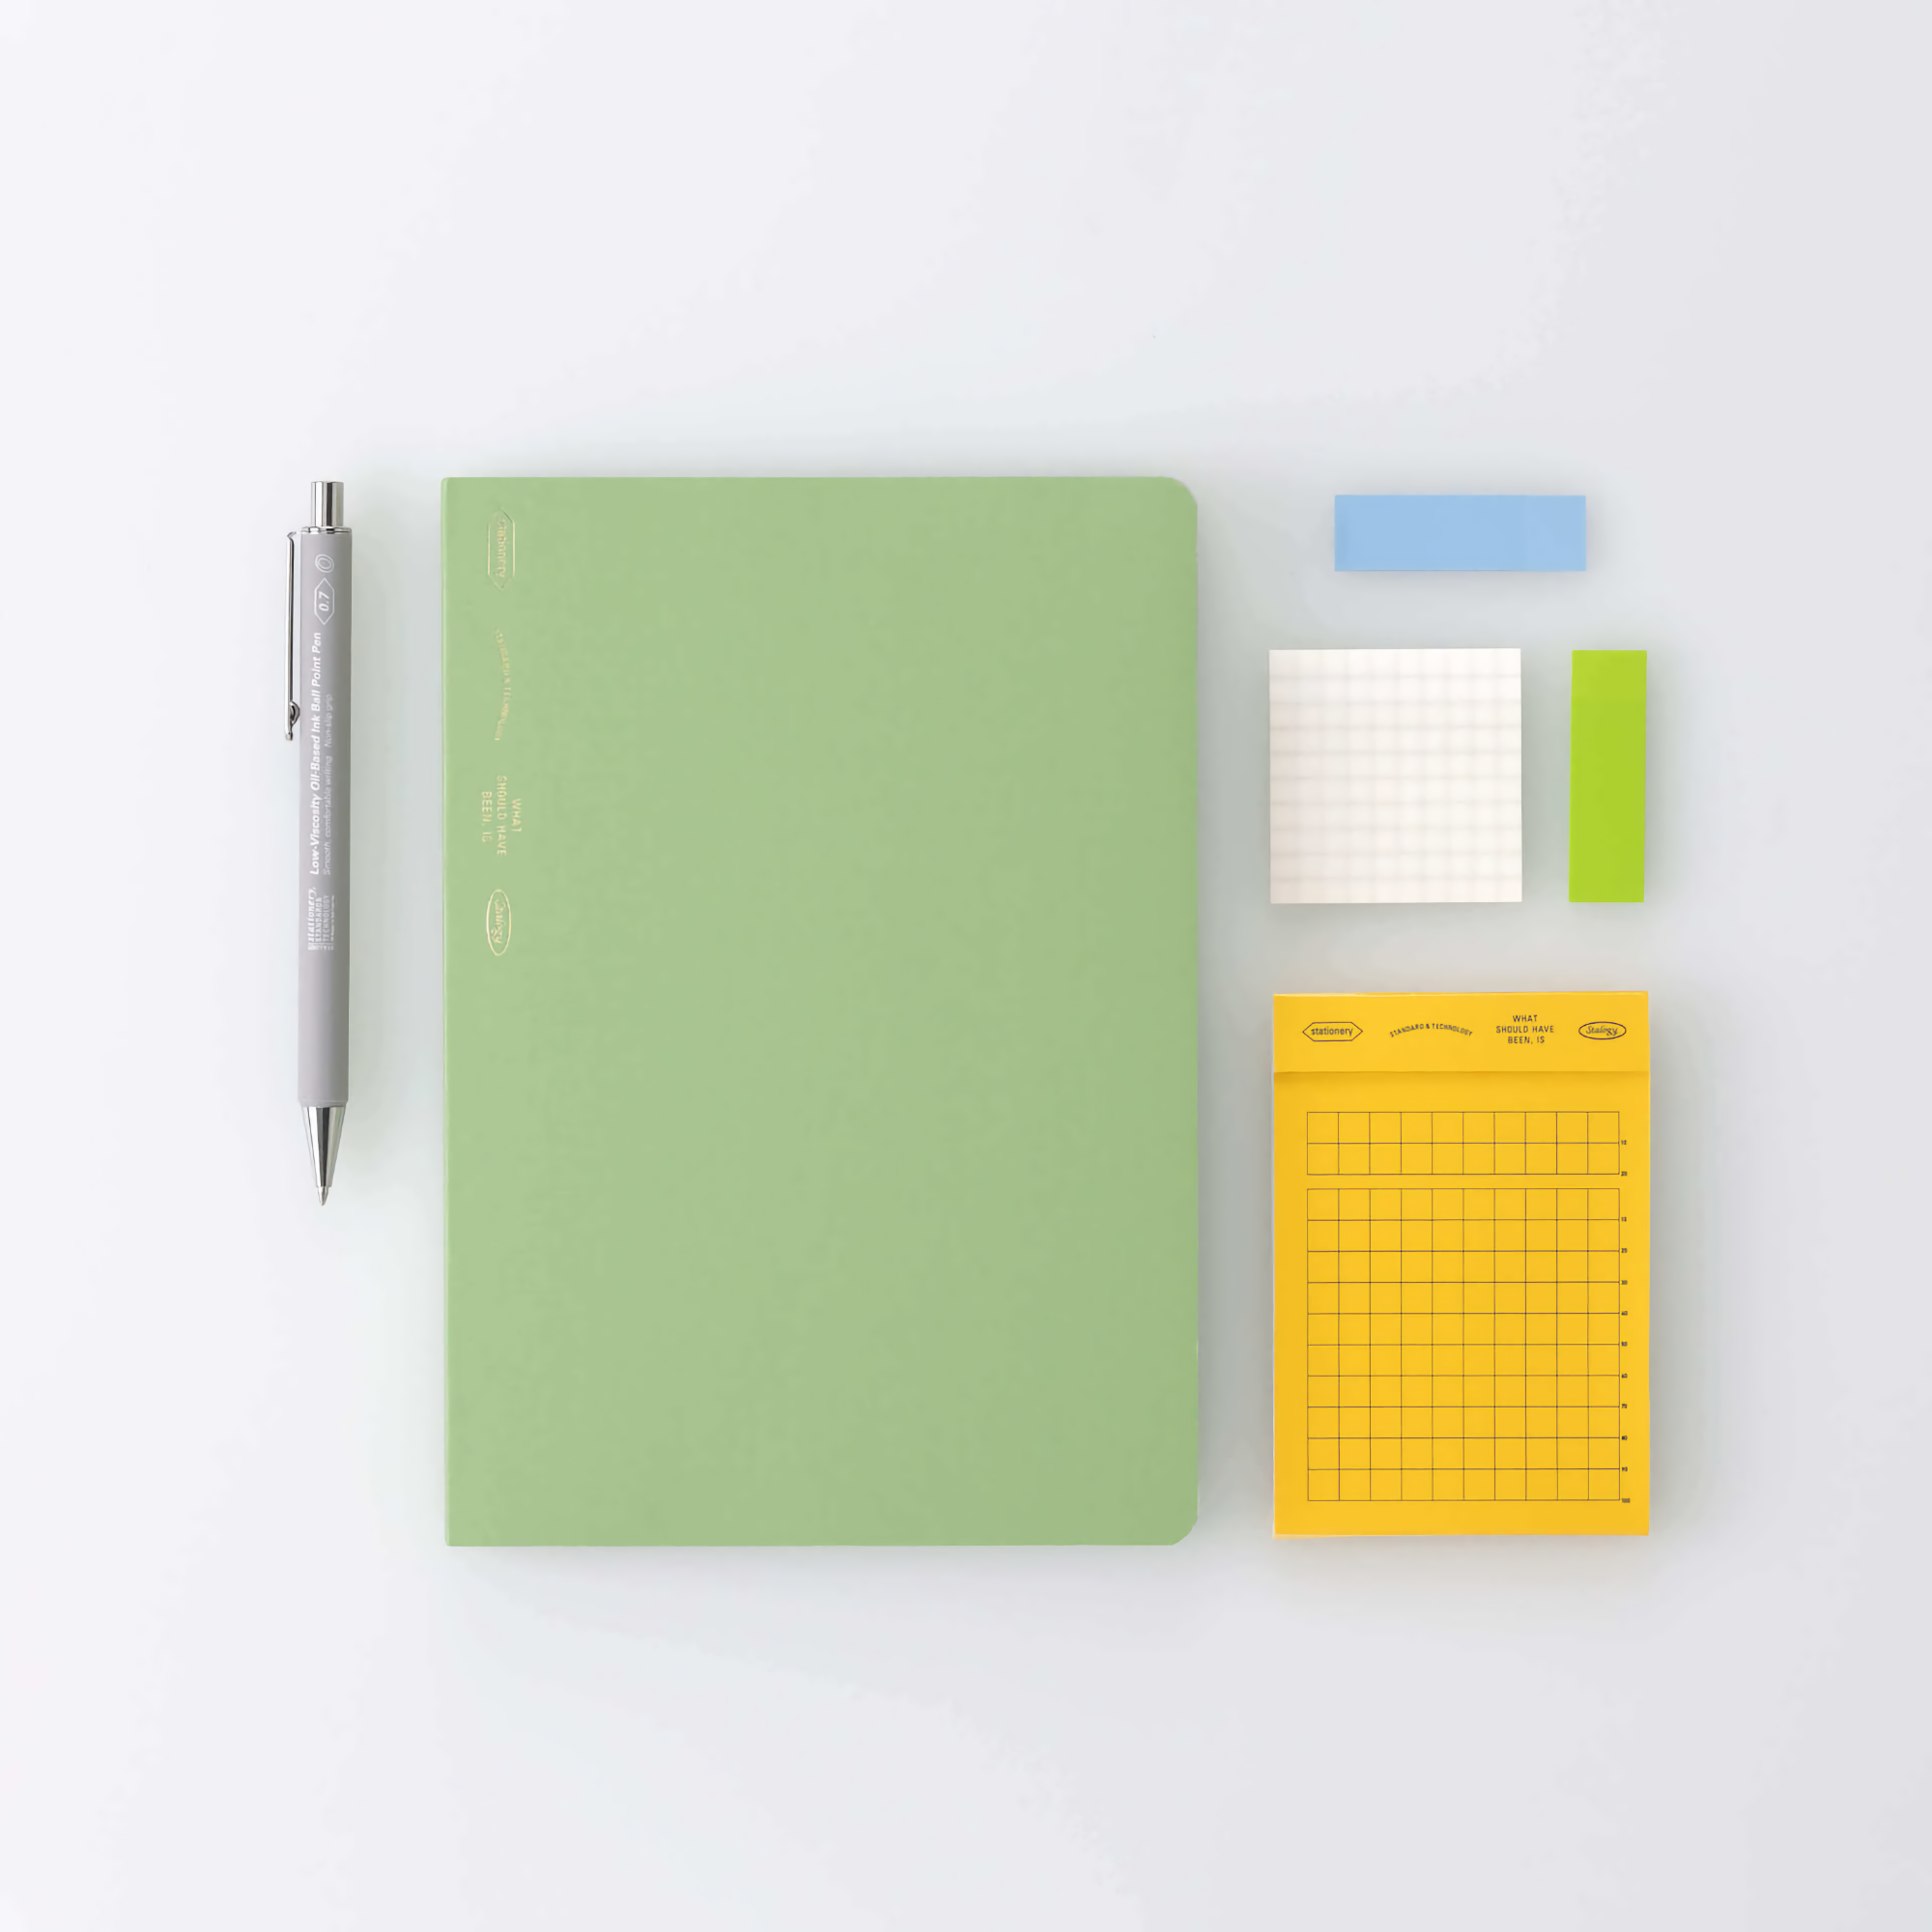 Stálogy 018 365 Days Notebook [A5] Pistachio Green [Limited Edition]